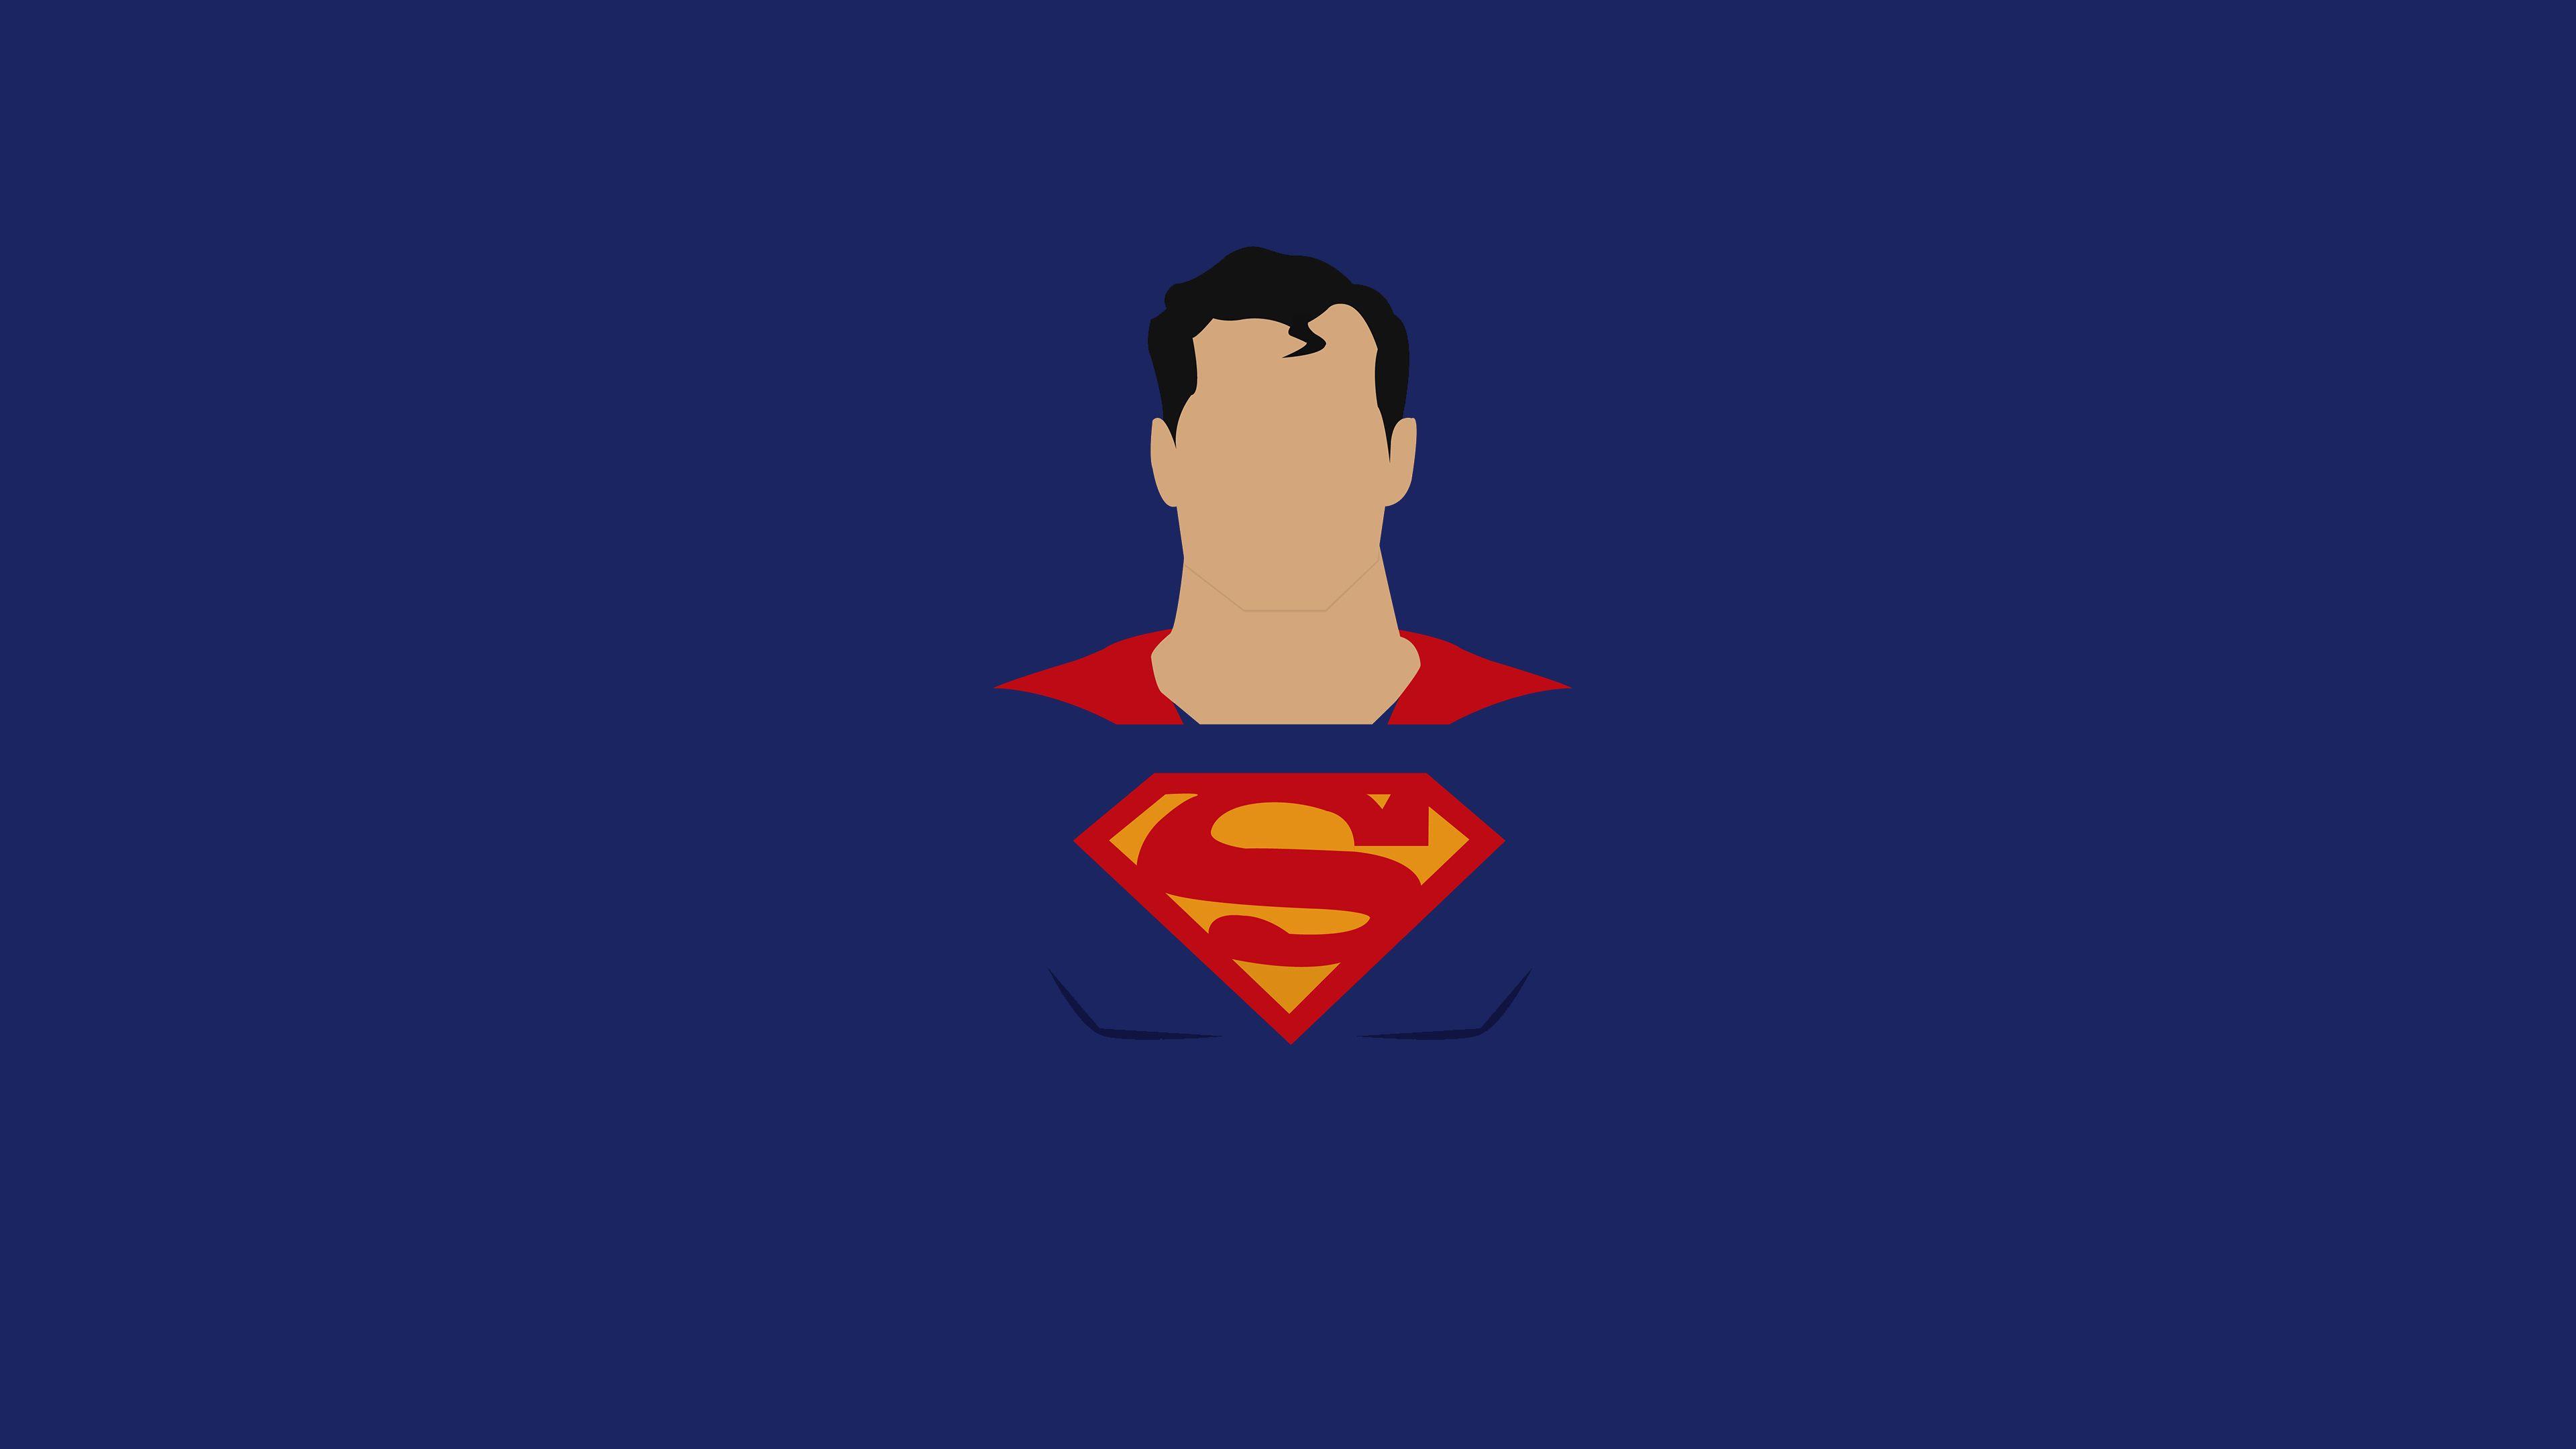 Superman Minimalism Art 4k superman wallpaper, superheroes